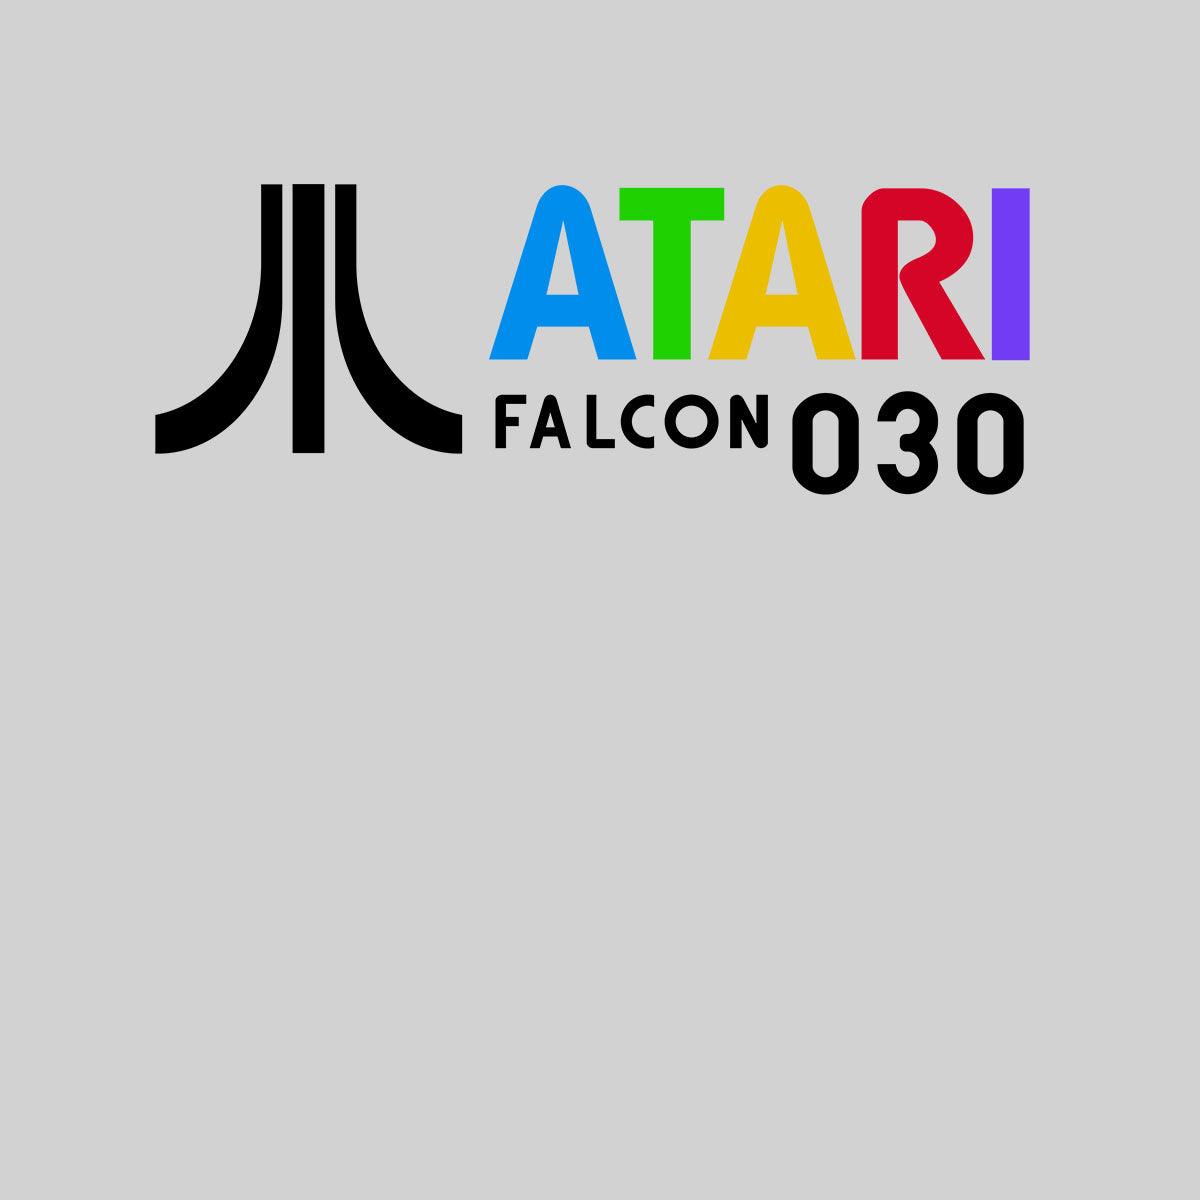 Atari Falcon 030 T shirt Big Logo Retro Arcade - Kuzi Tees